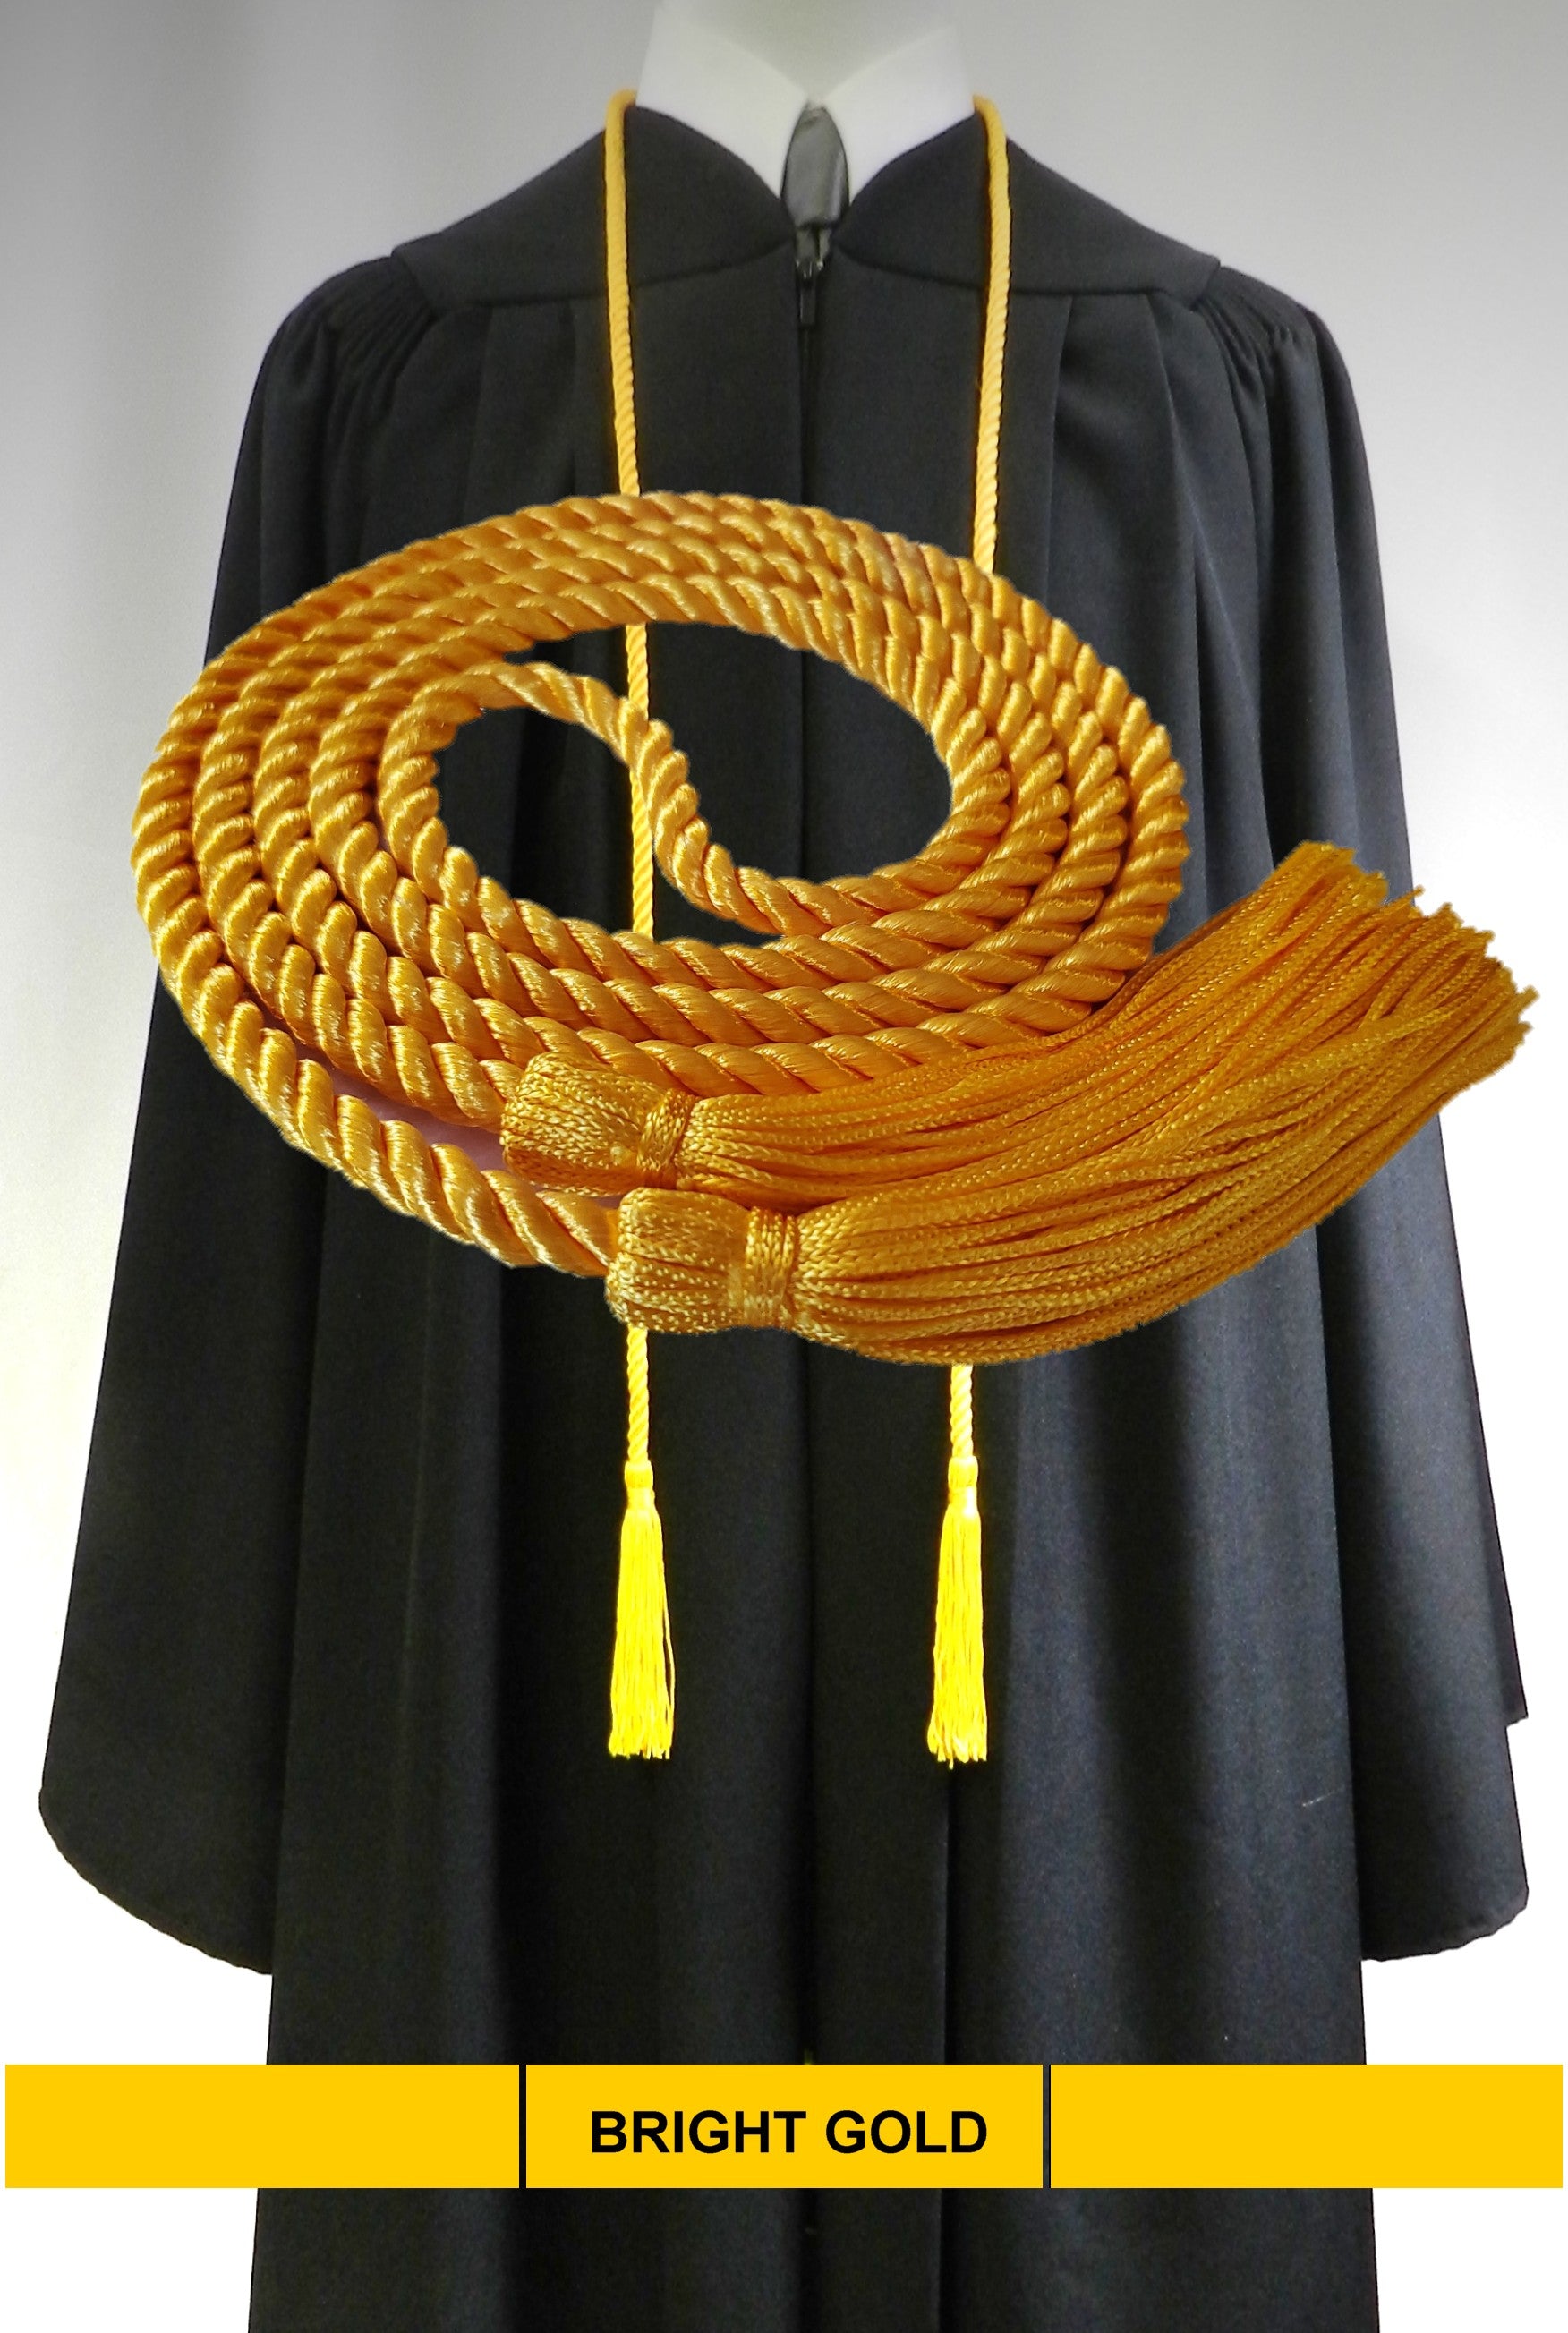 Gold Graduation Honor Cords